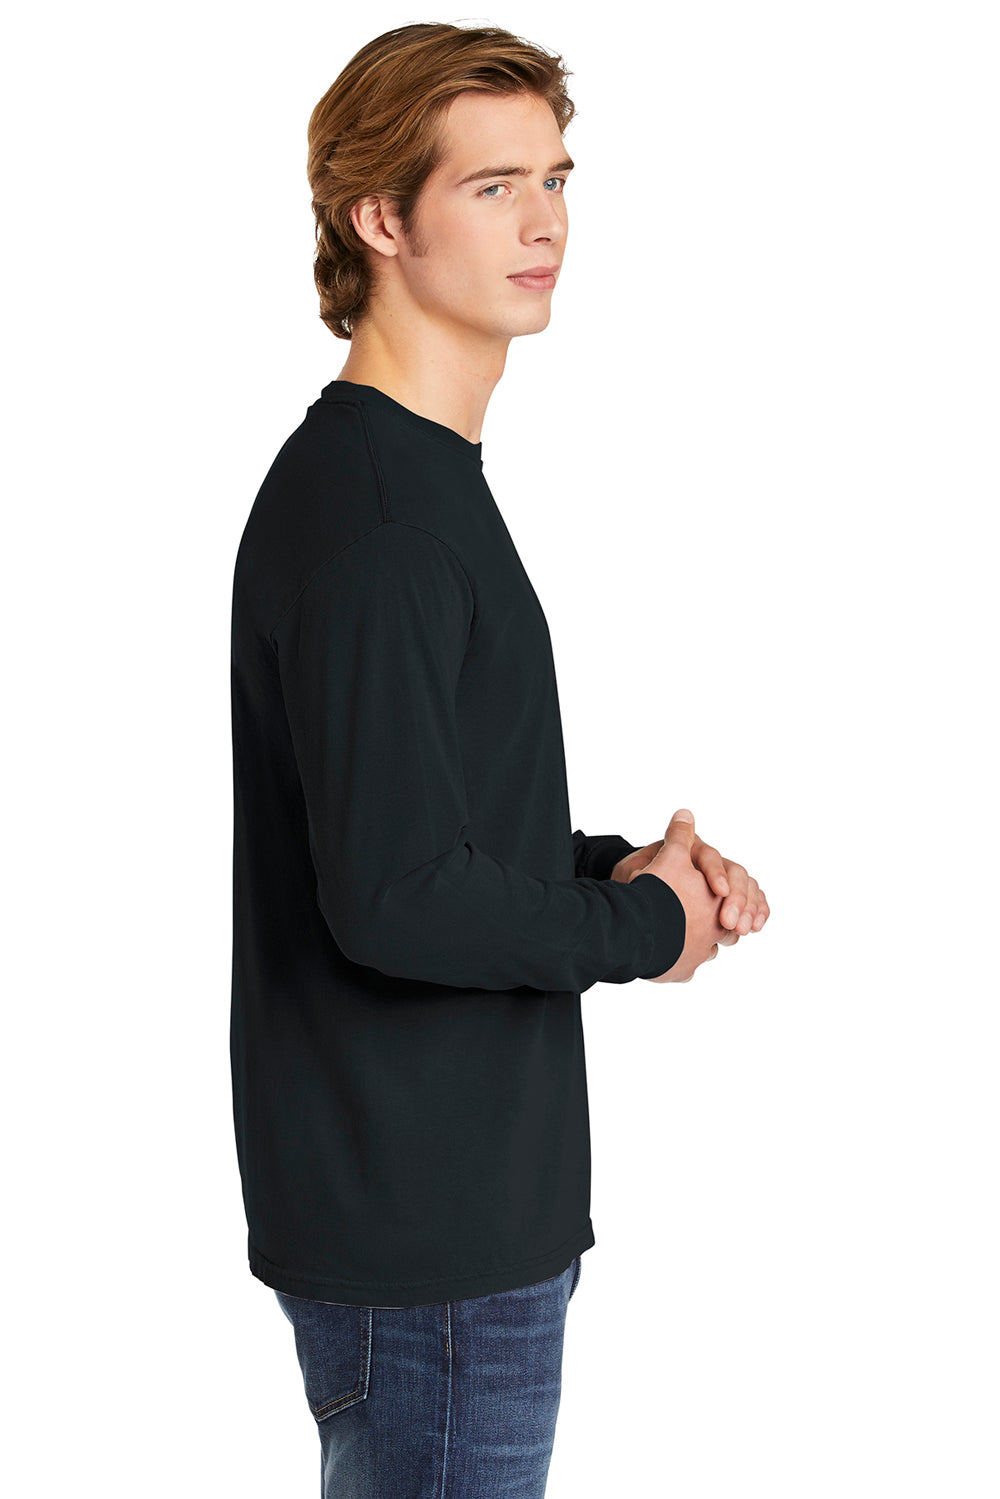 Comfort Colors 6014/C6014 Mens Long Sleeve Crewneck T-Shirt Black Side